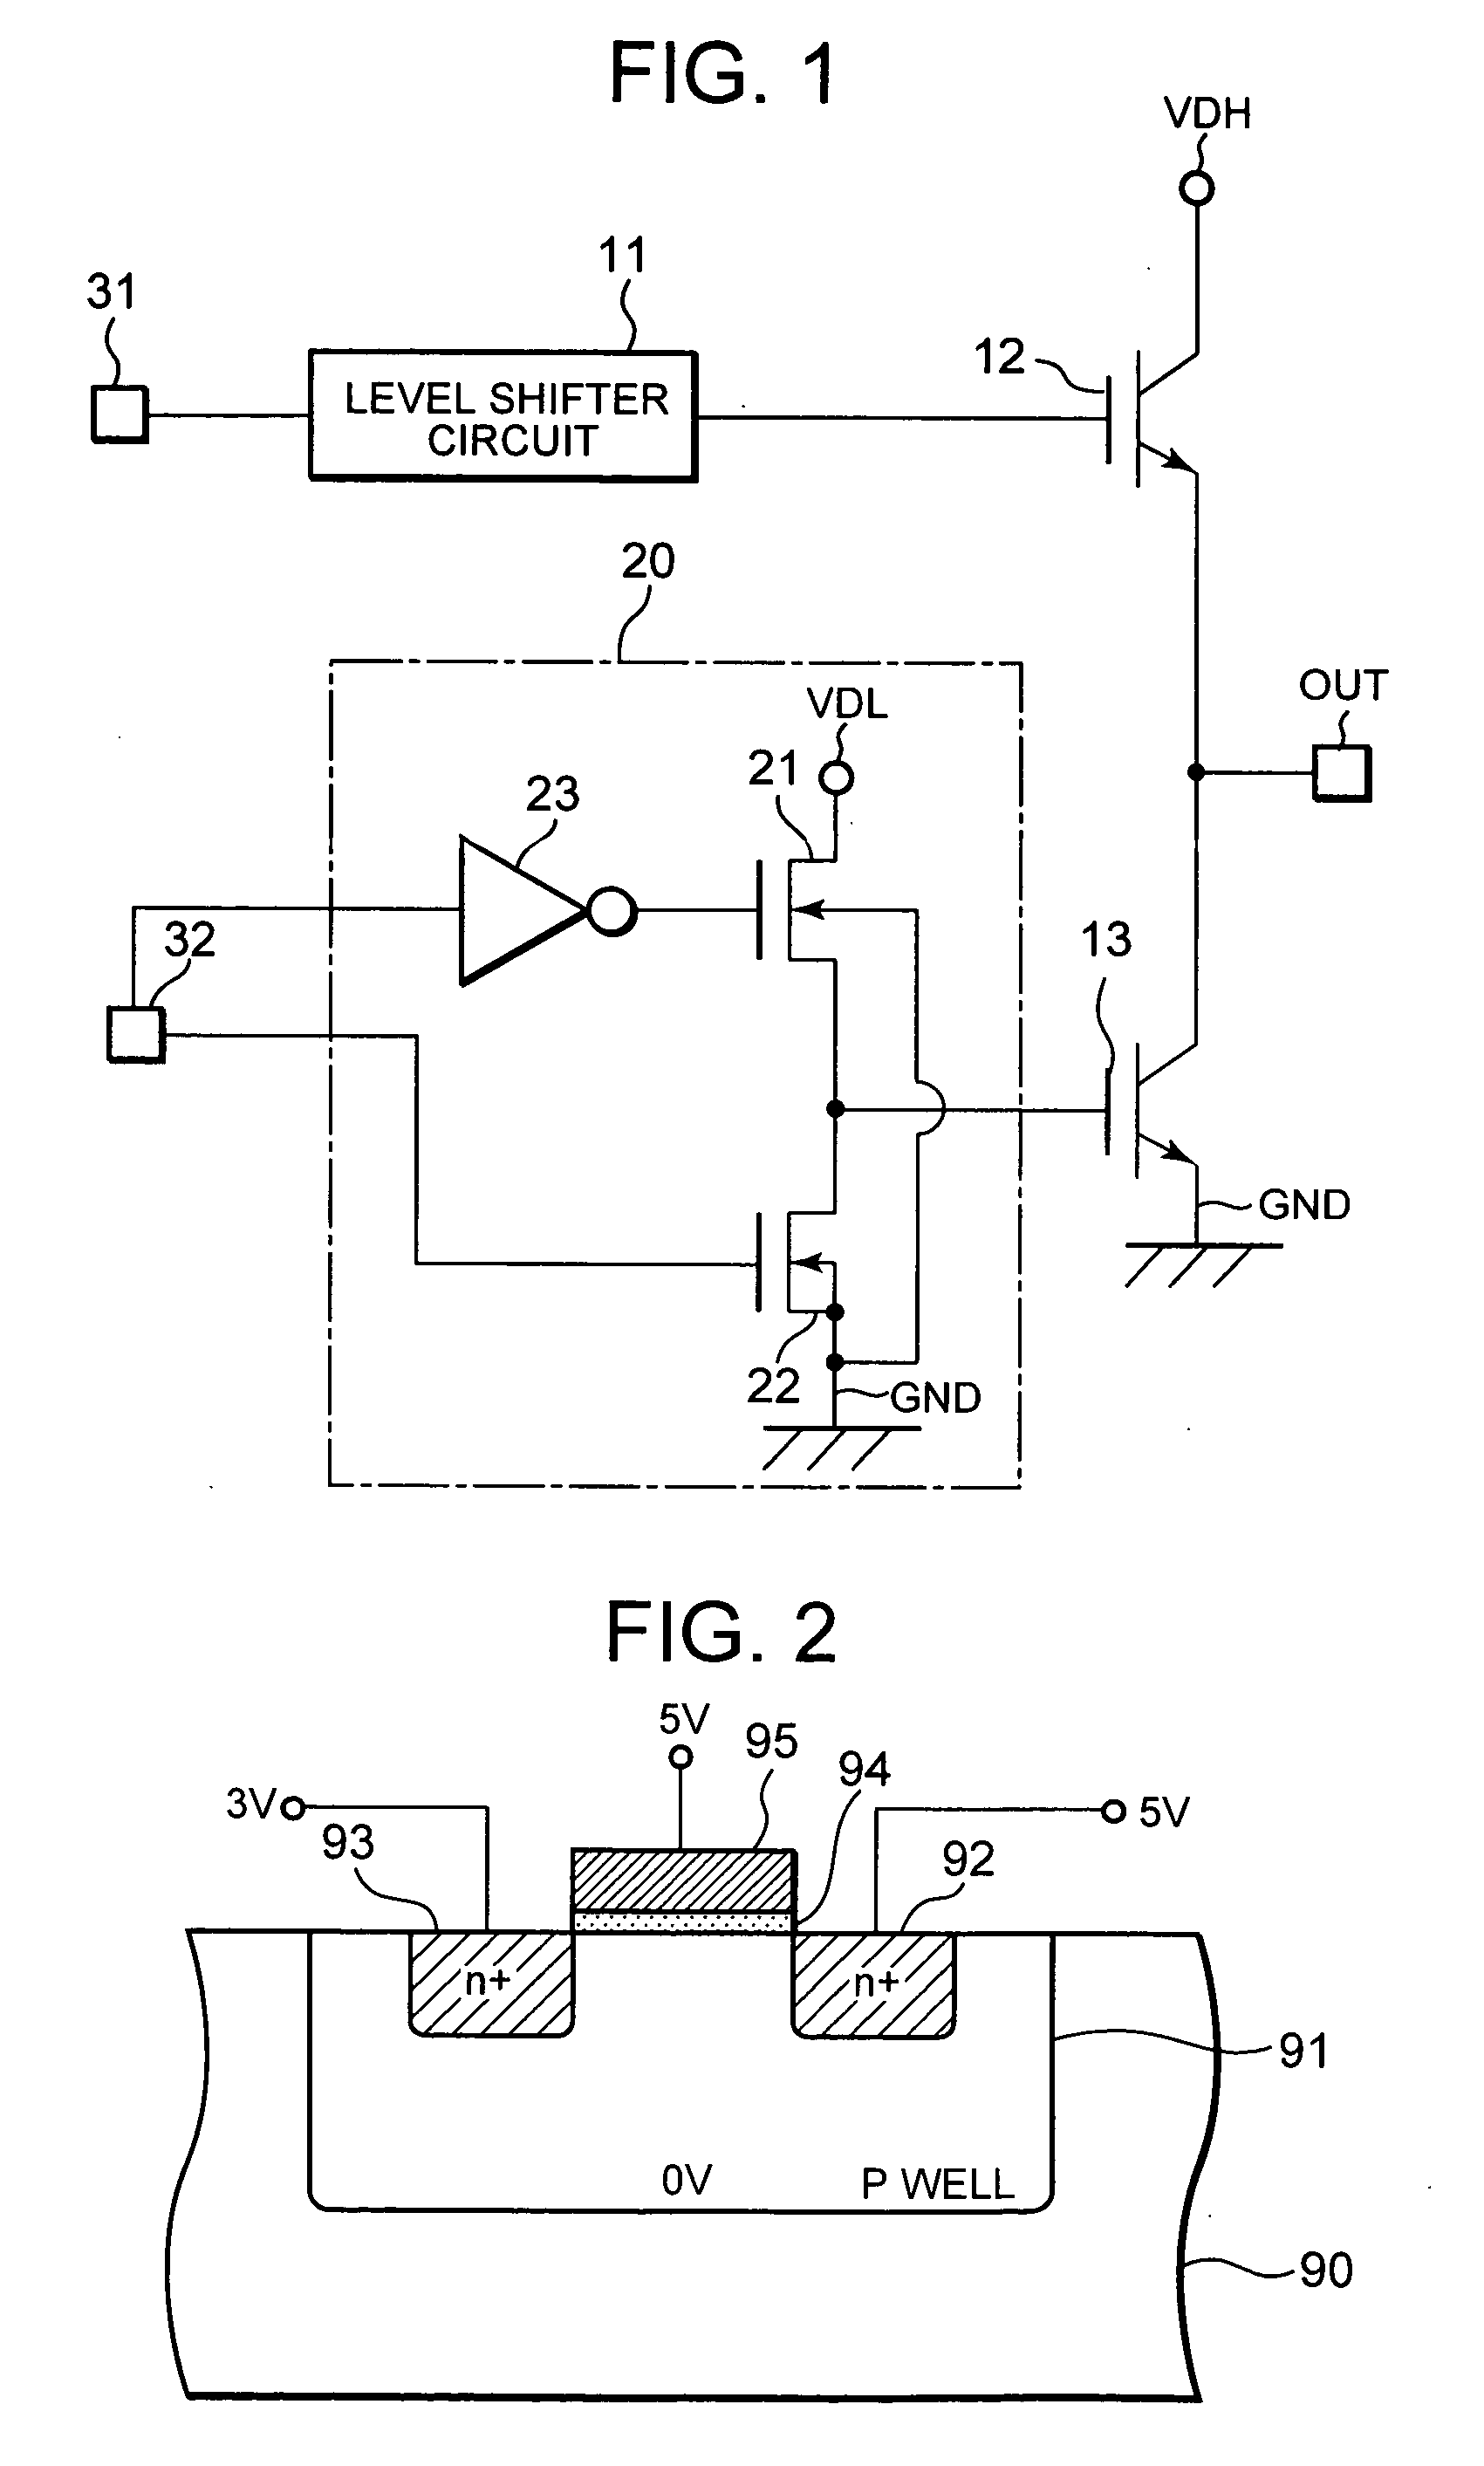 Display apparatus driving circuitry